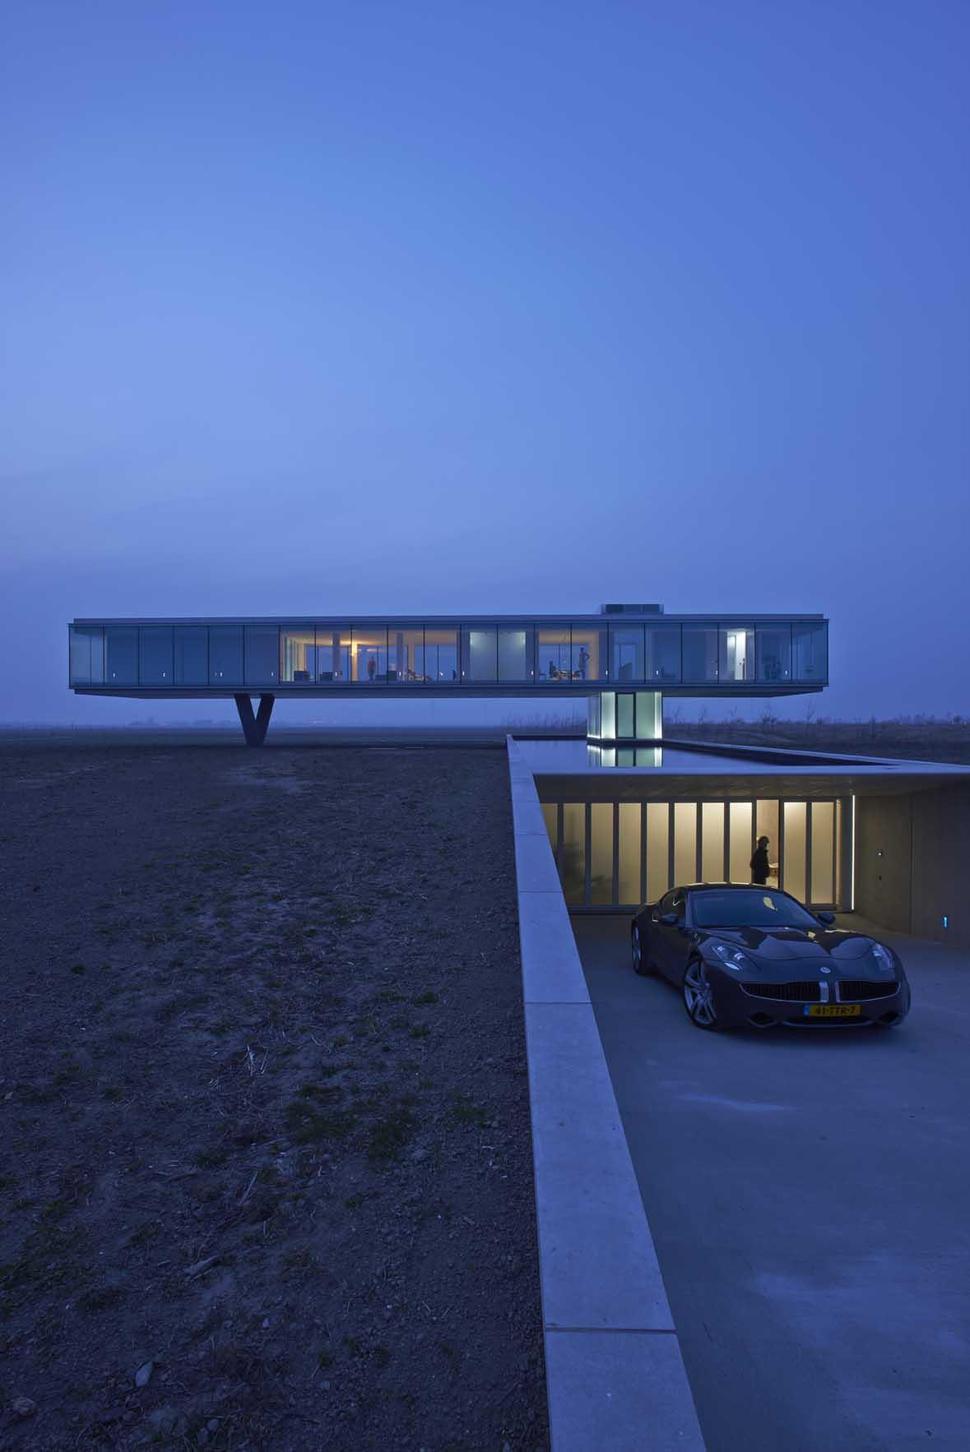 striking-minimal-glass-house-elevated-above-barren-landscape-4-far-night.jpg